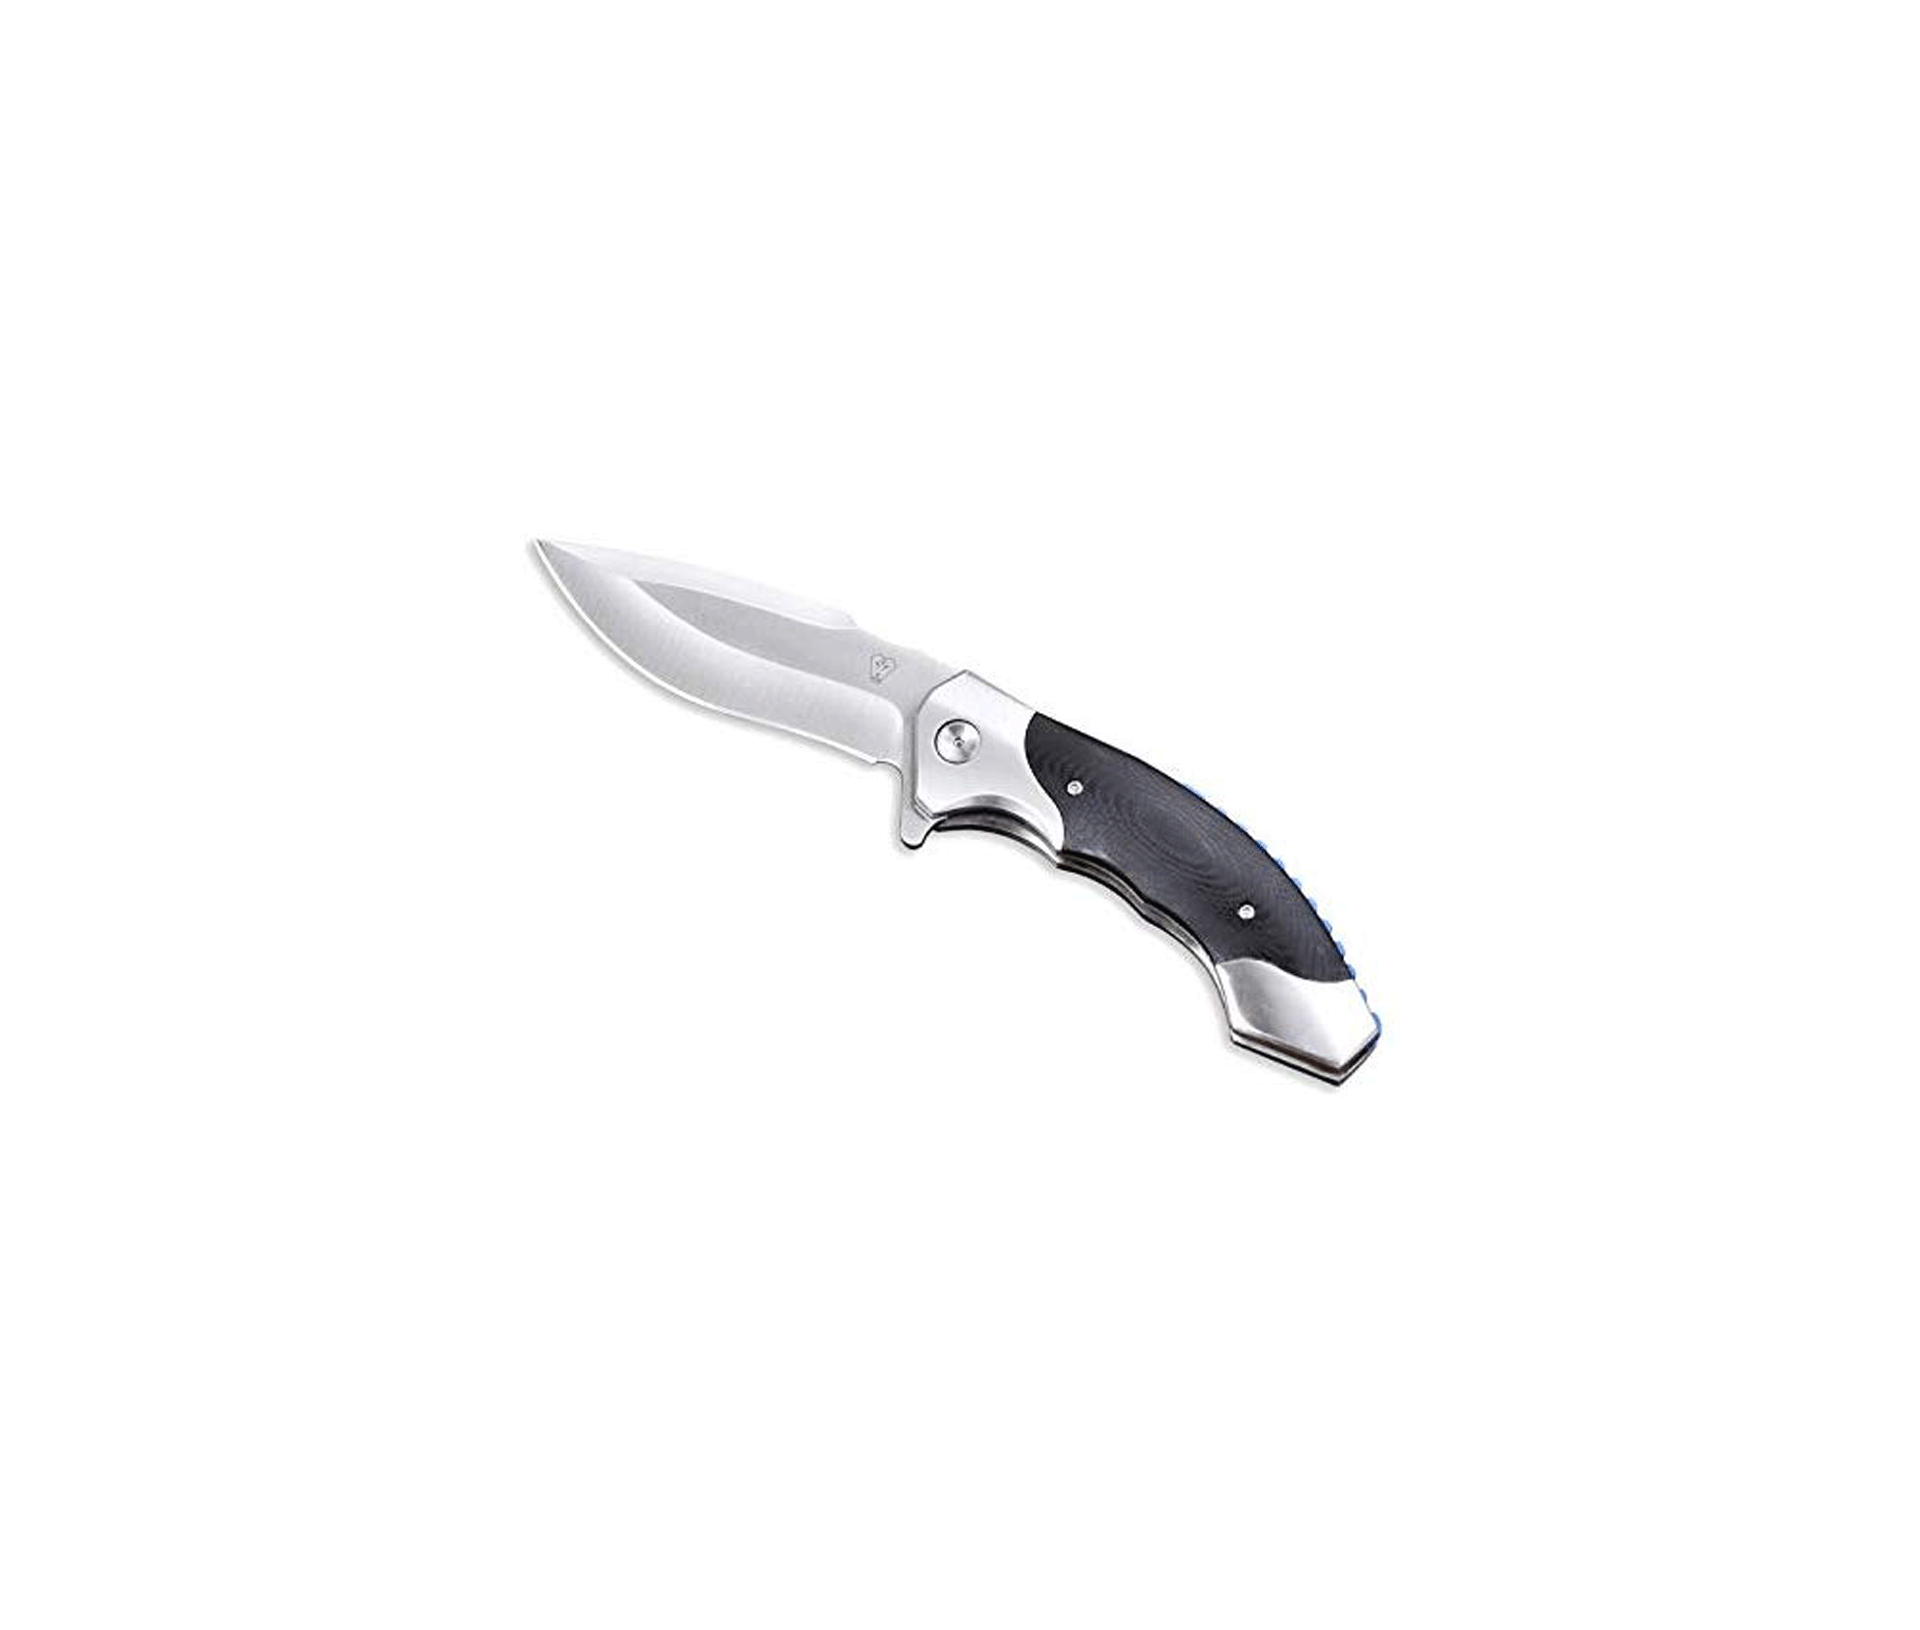 Voltron V21 9Cr18Mov Blade Survival Knife